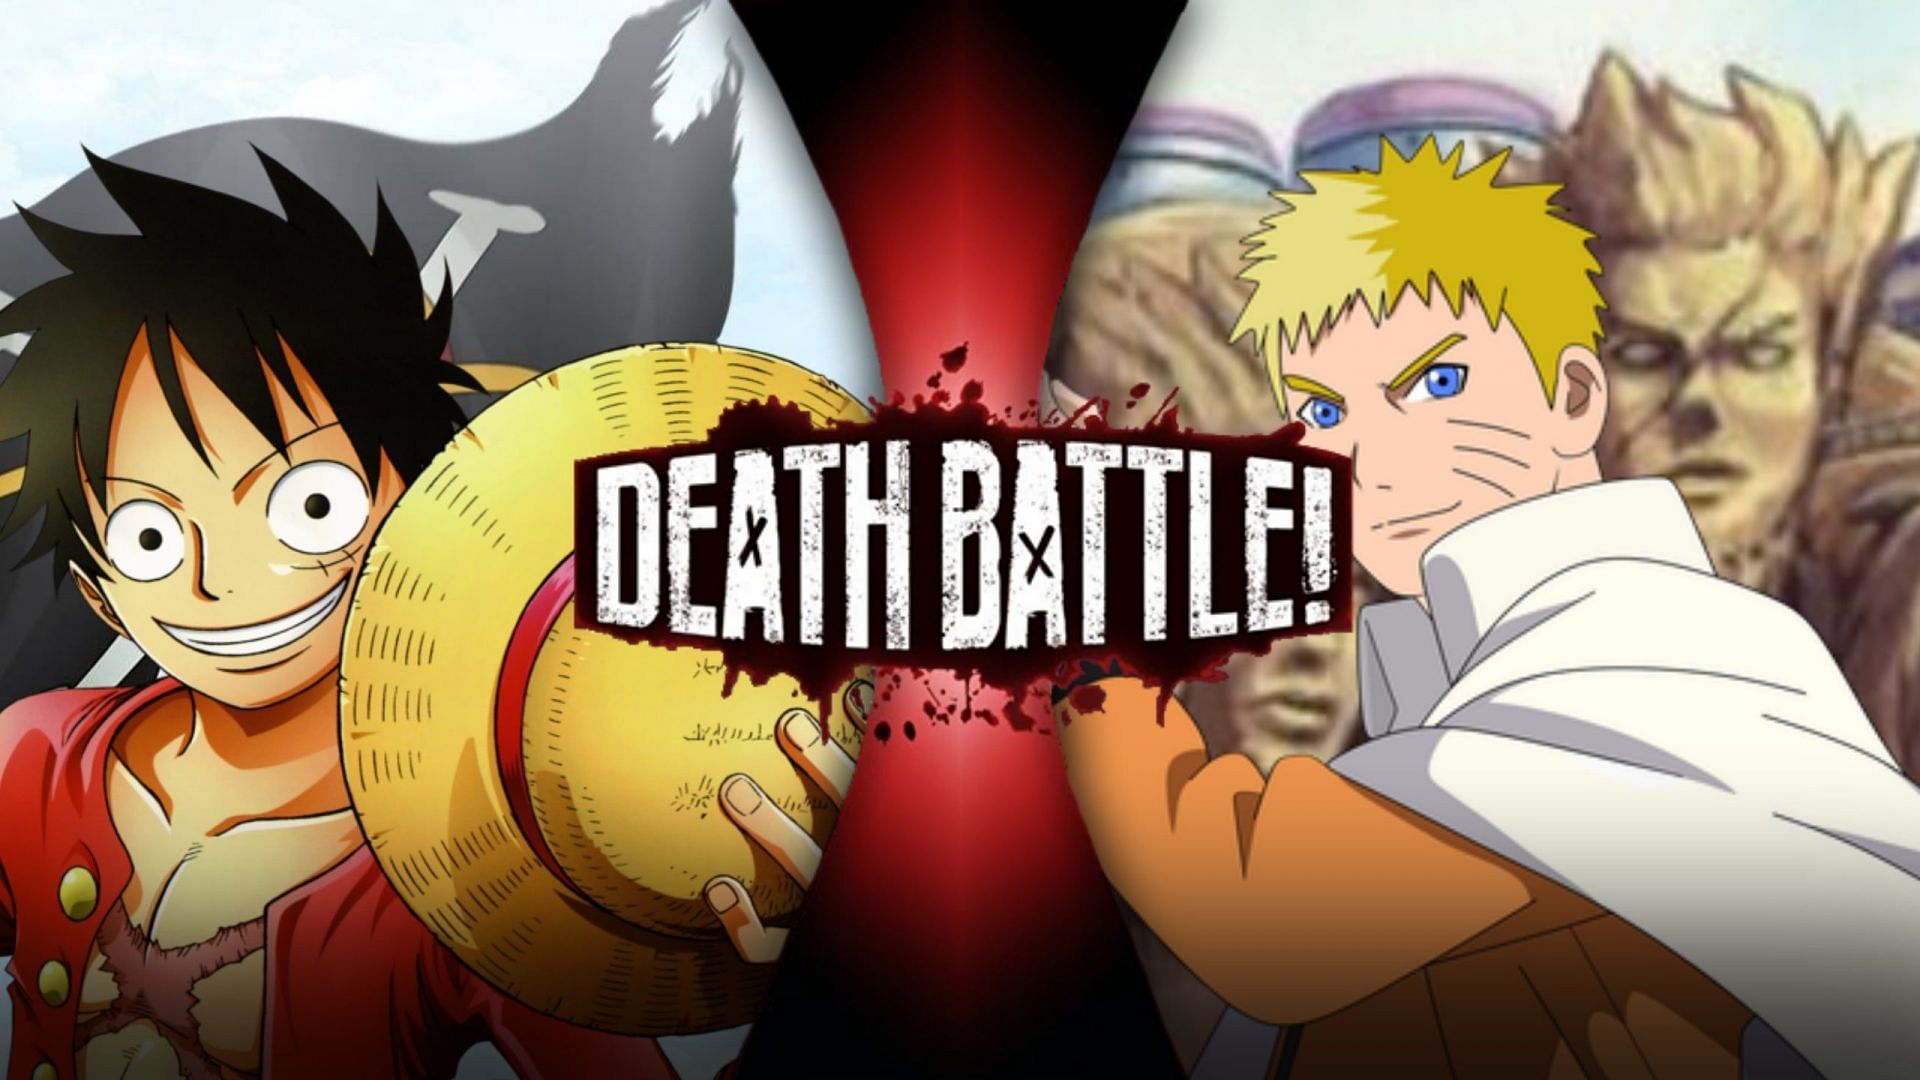 Baryon Mode Naruto Vs. Luffy Gear 5: Who Would Win?